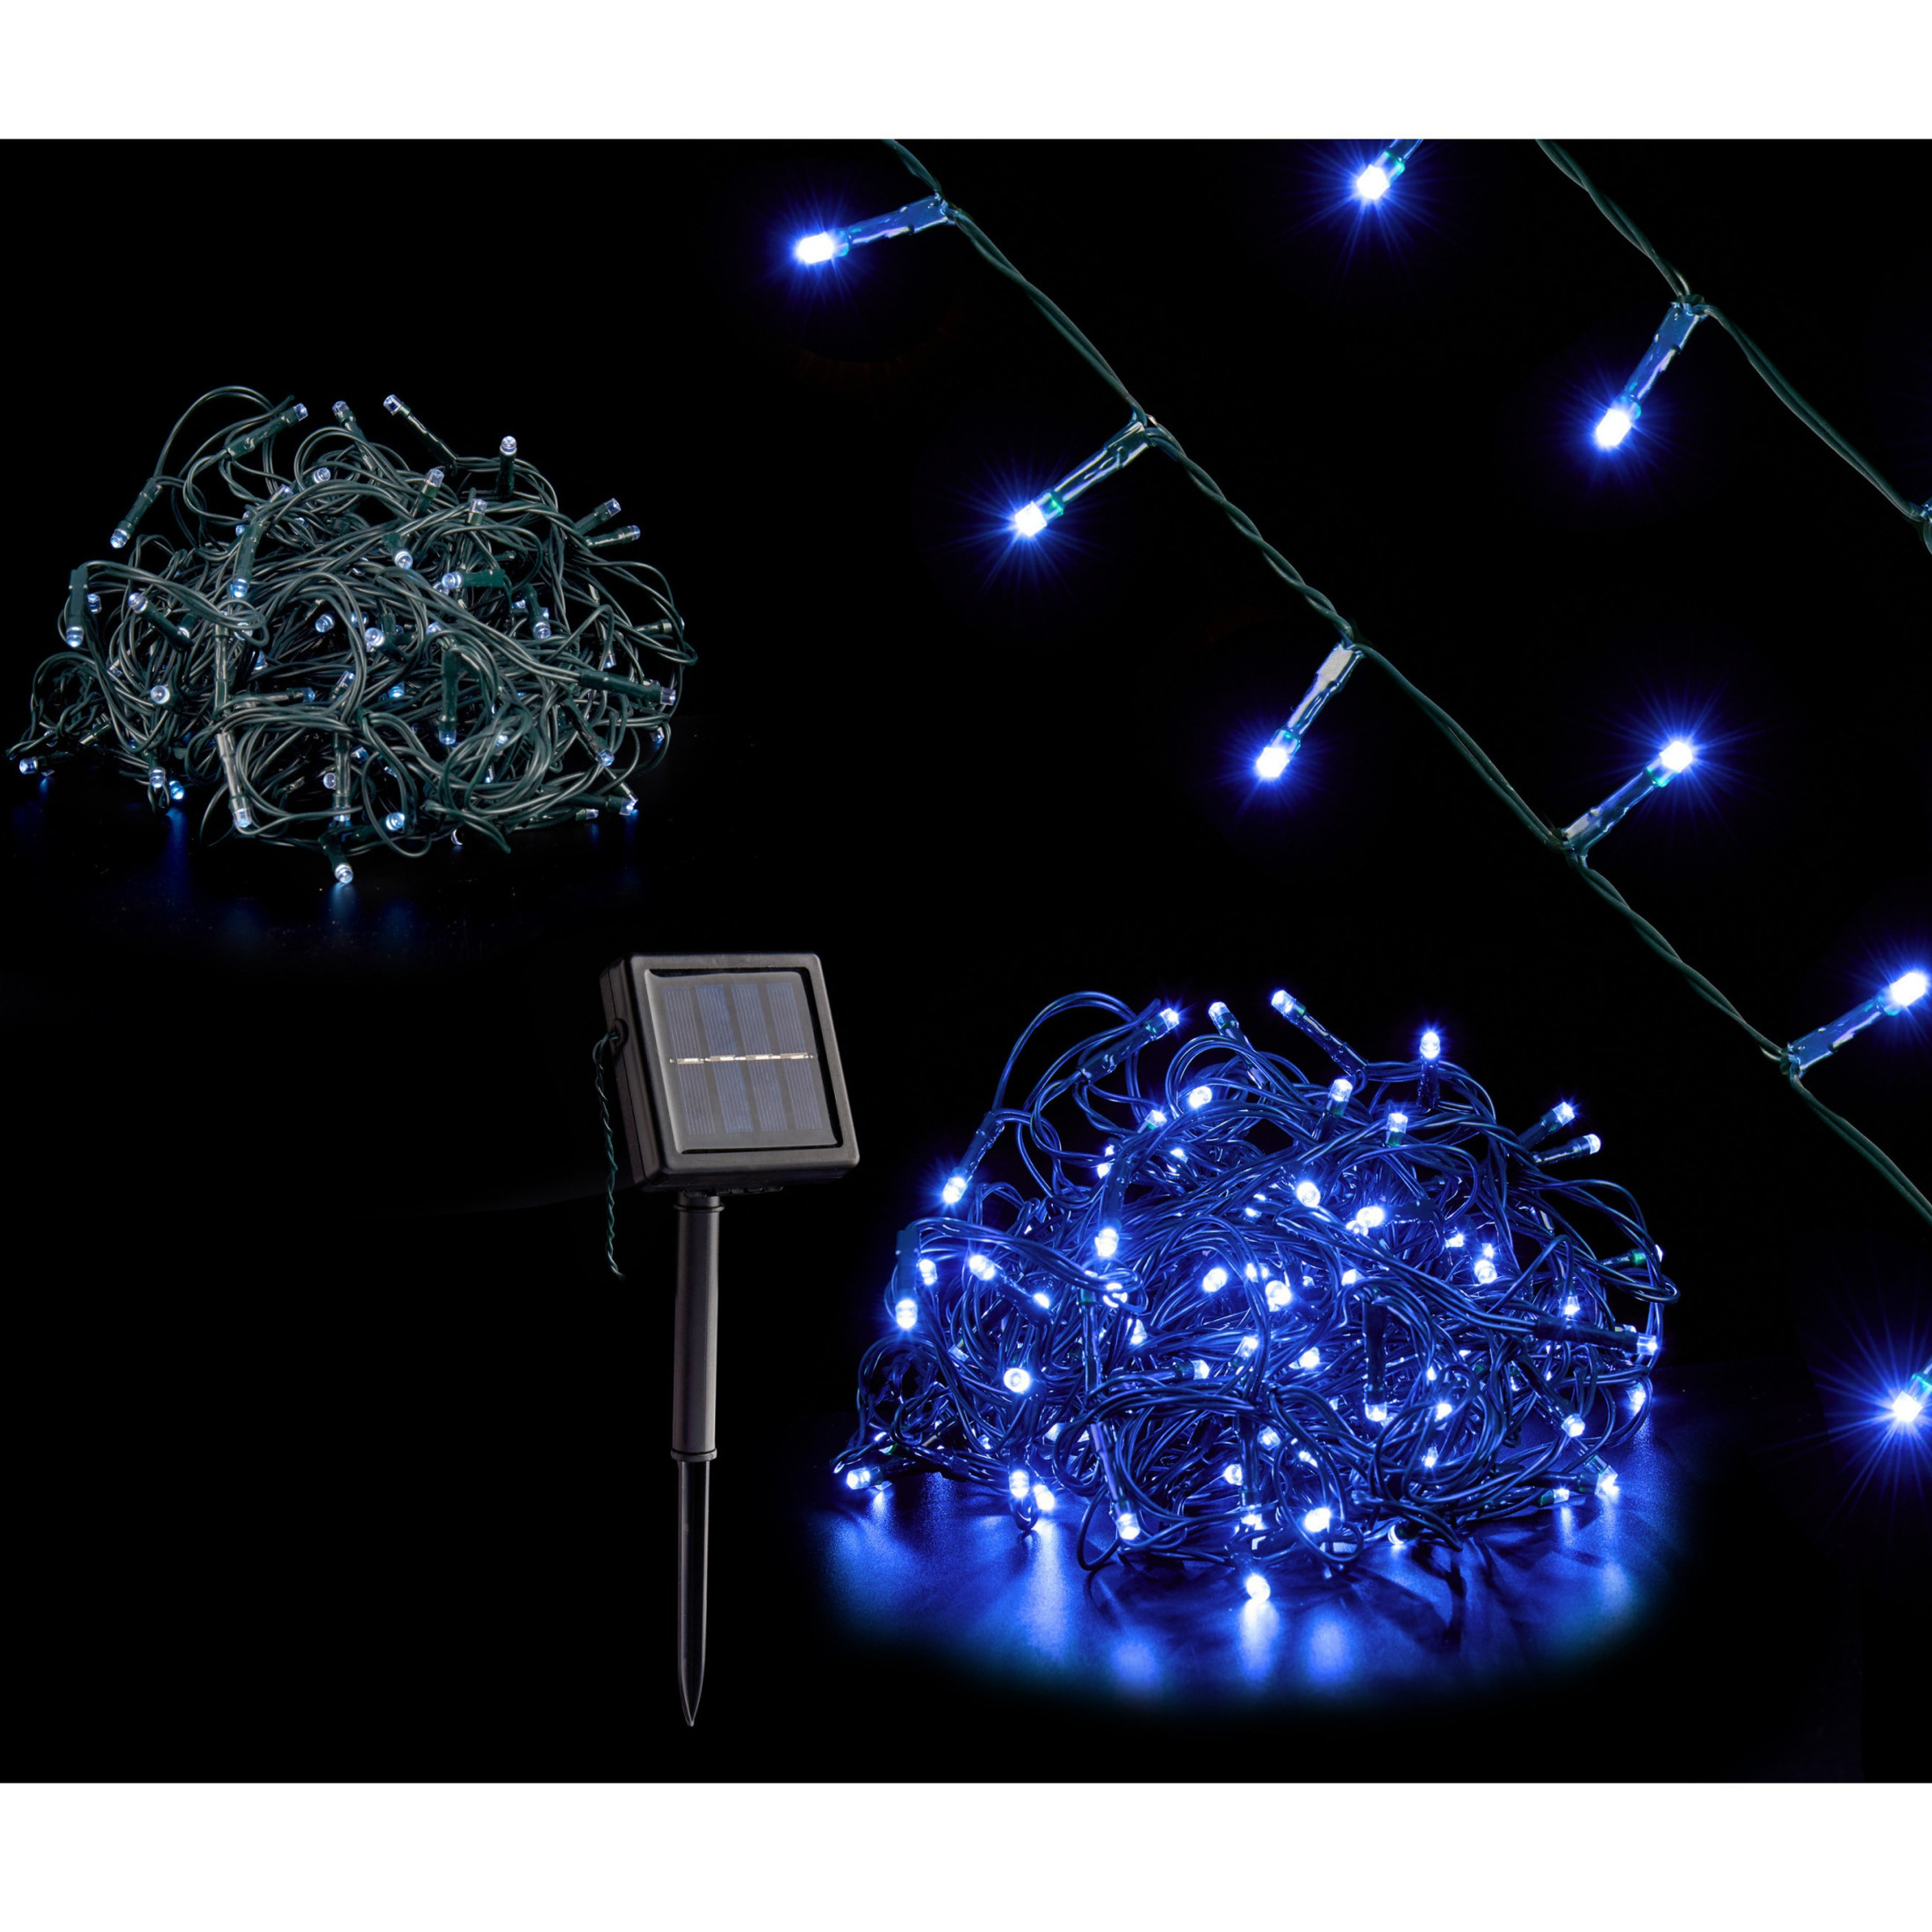 Kerstverlichting/party lights 200 blauwe LED lampjes op zonne-energie